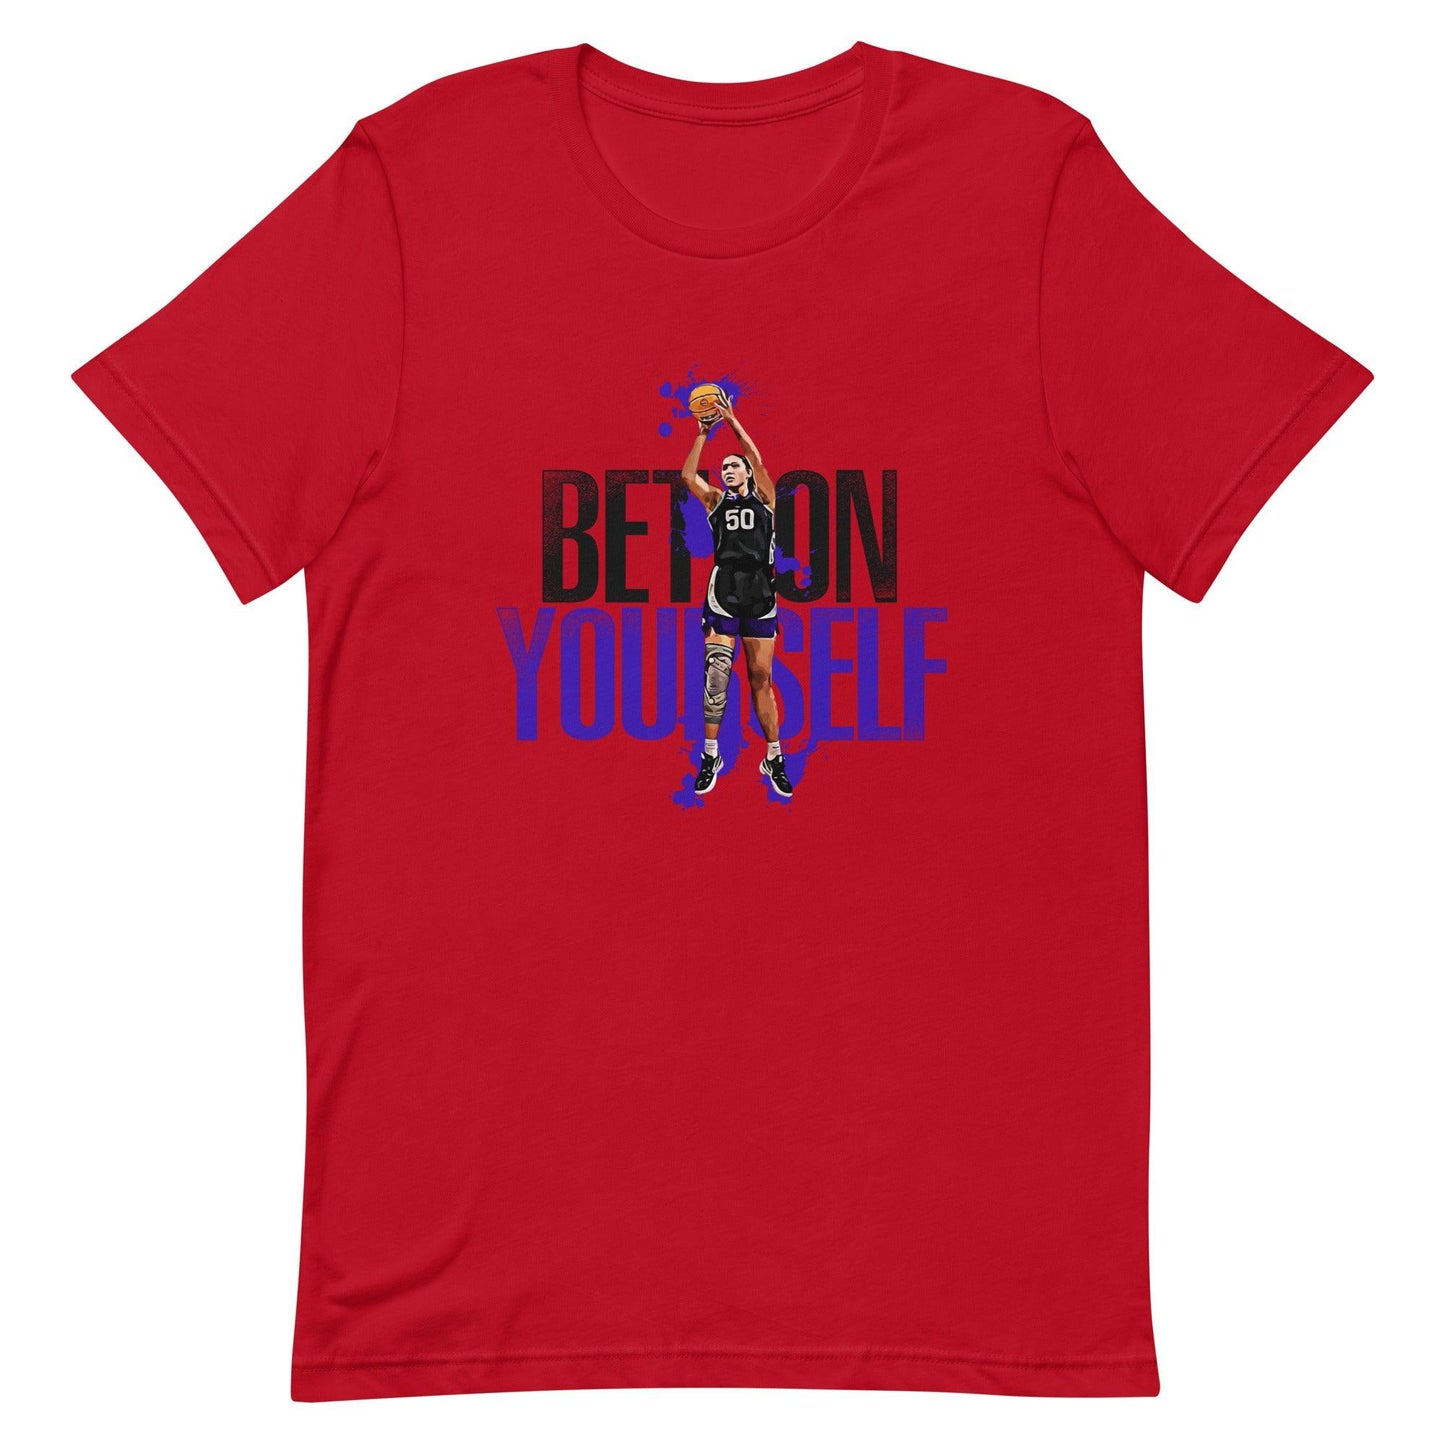 Ayoka Lee "Bet On Yourself" t-shirt - Fan Arch